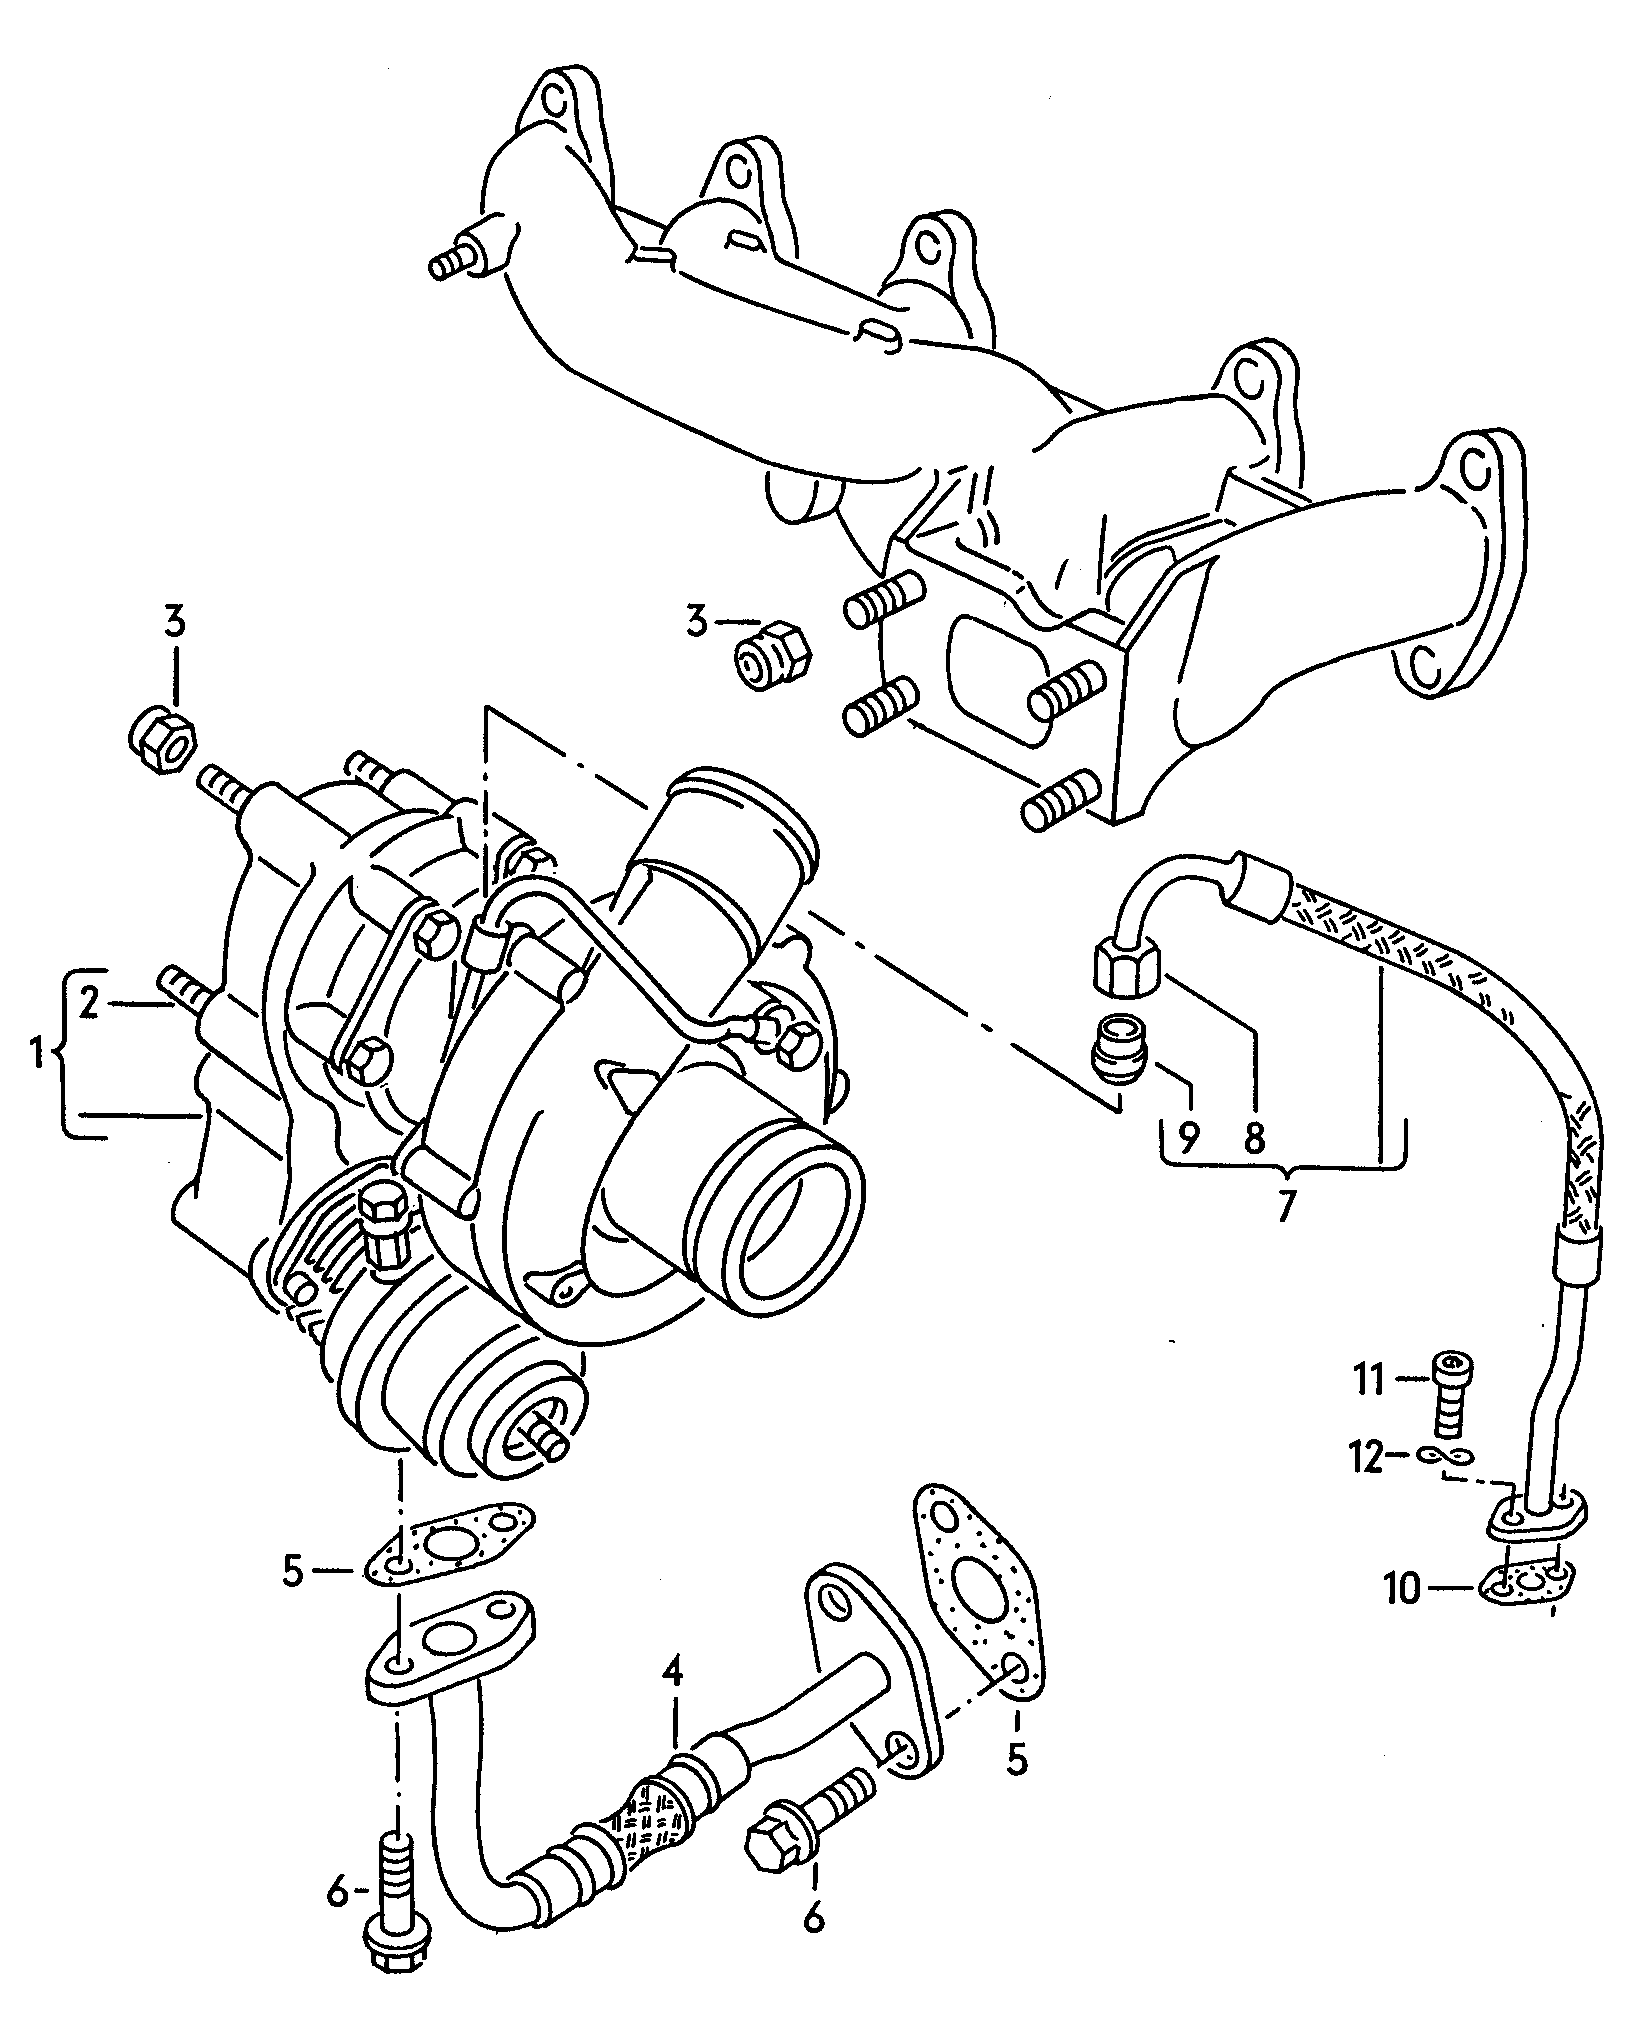 Abgasturbolader 2,0Ltr. - Audi 100/Avant - a100